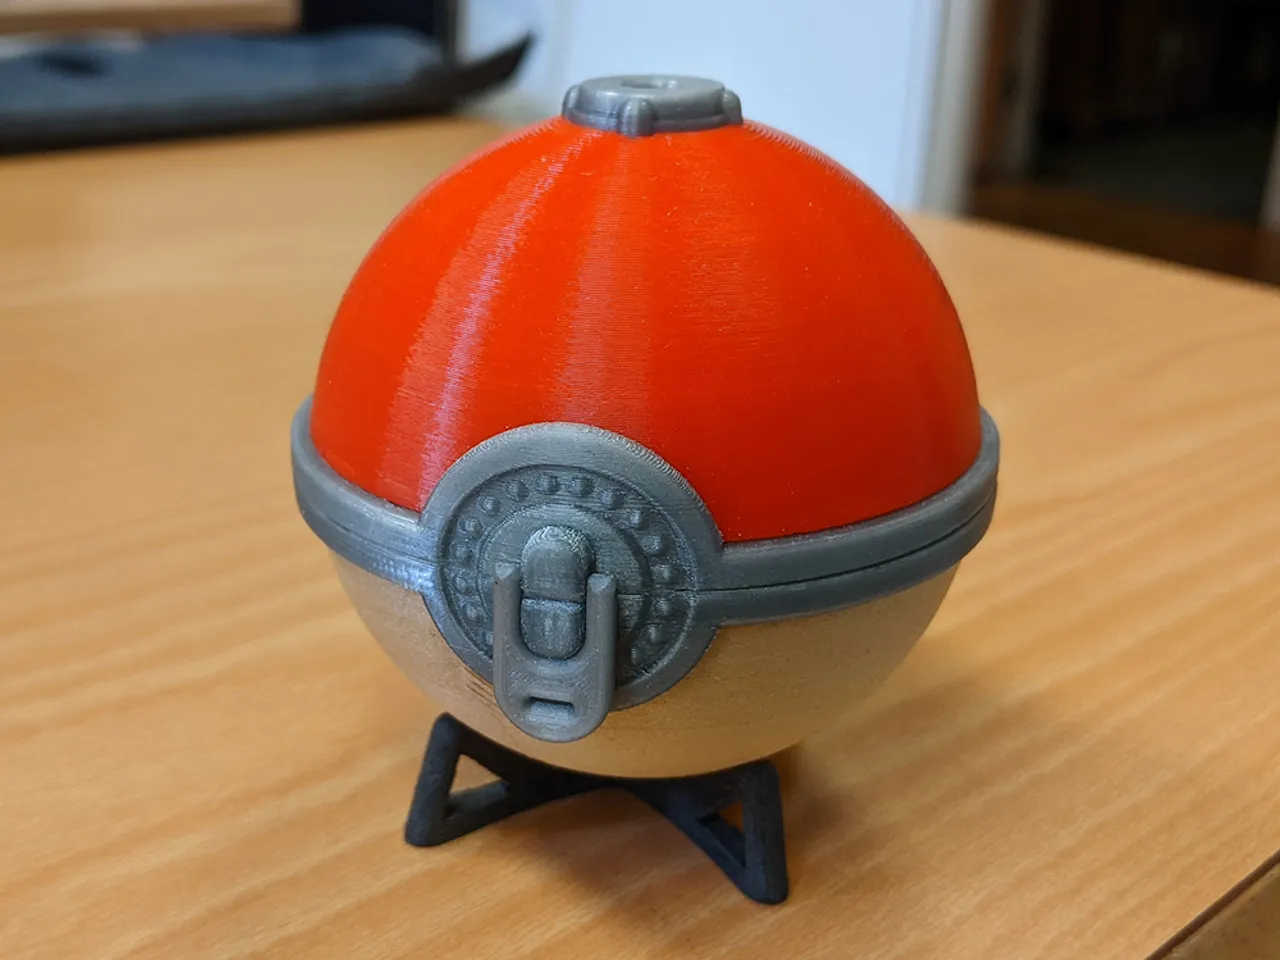 Pokemon Red Edition 3D model 3D printable